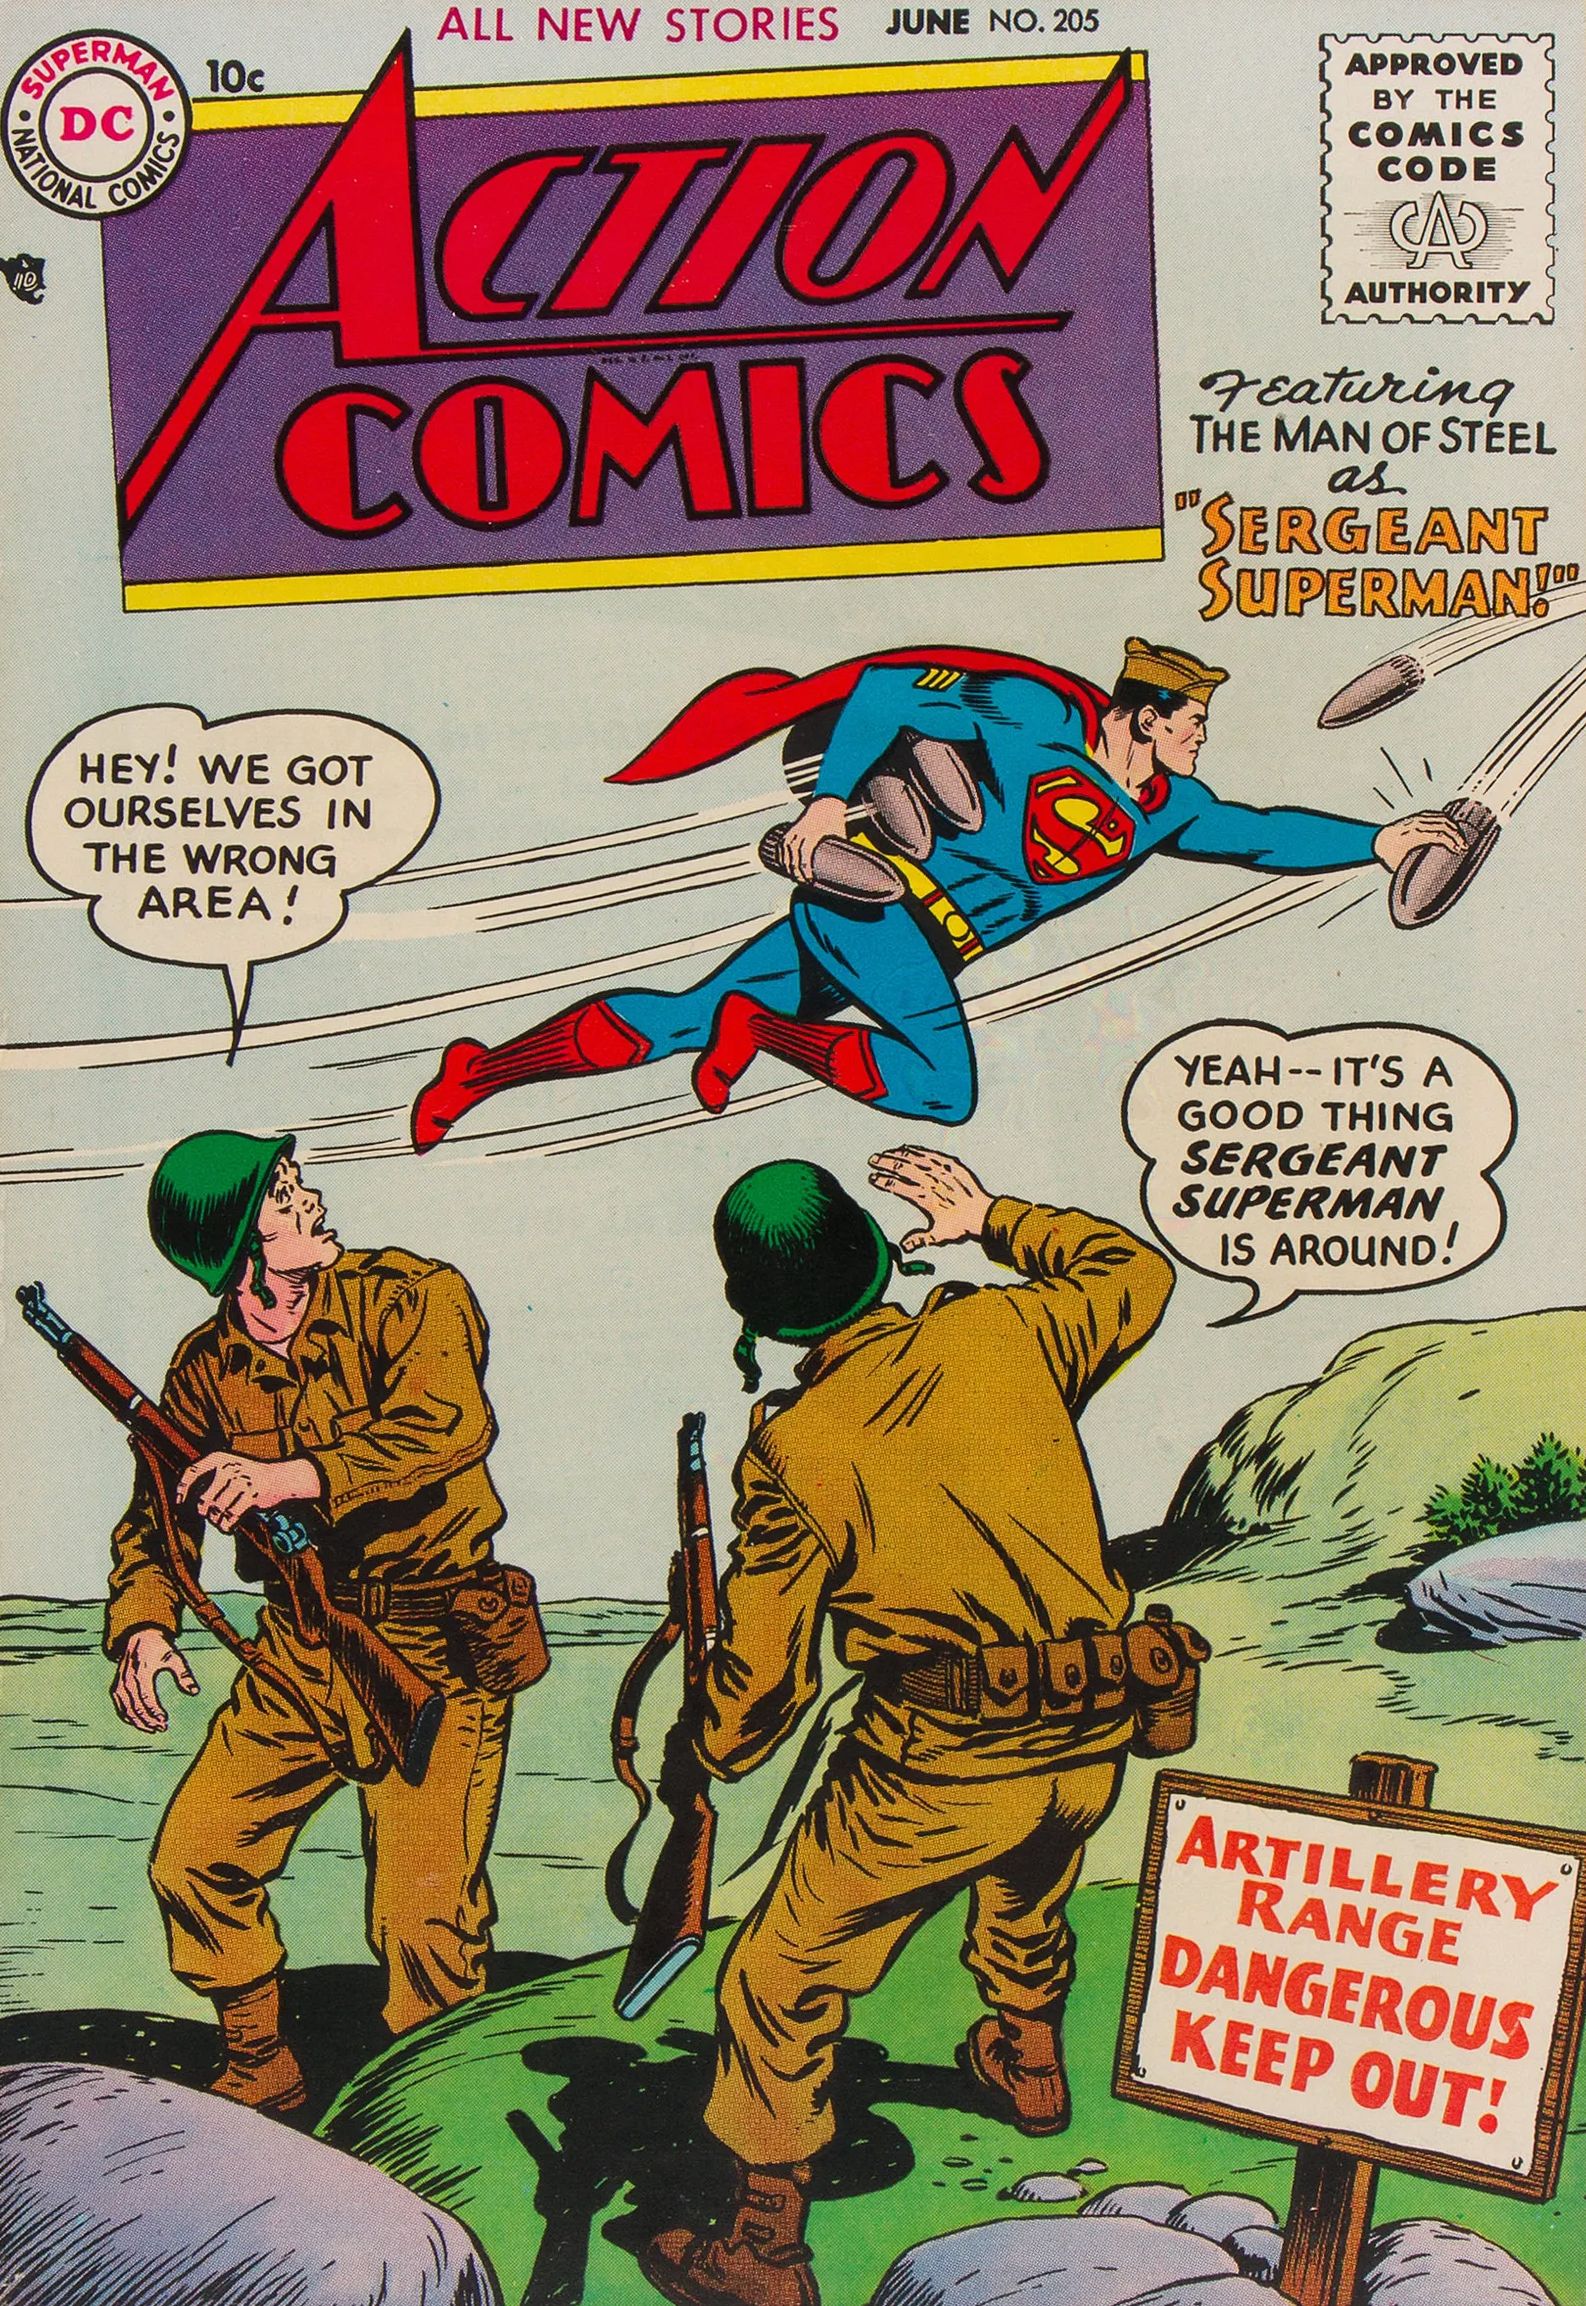 Action Comics #205 Comic